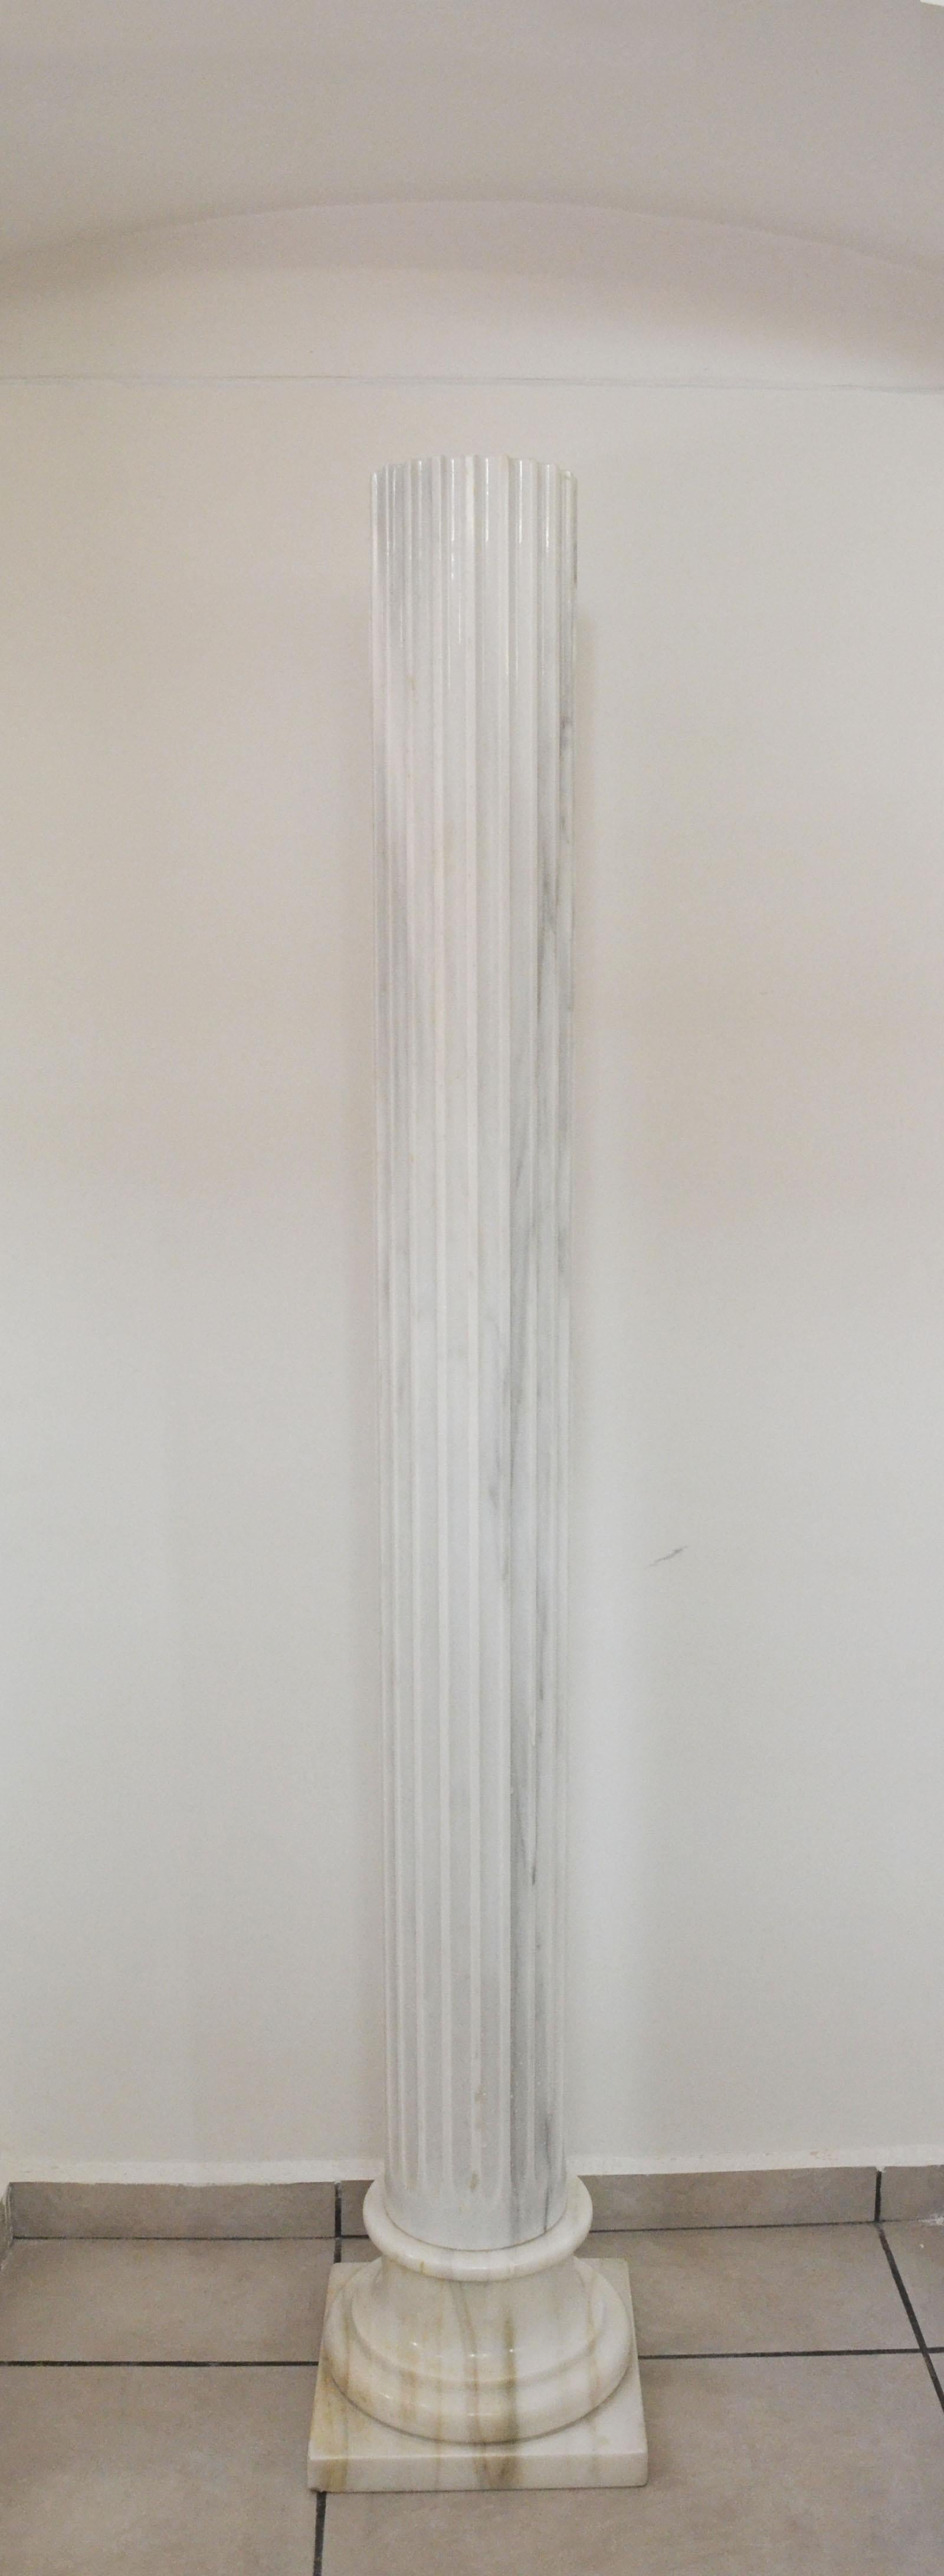 Spanish 'ATHENA' Large Column / Pillar White Carrara Marble by Element & Co. For Sale